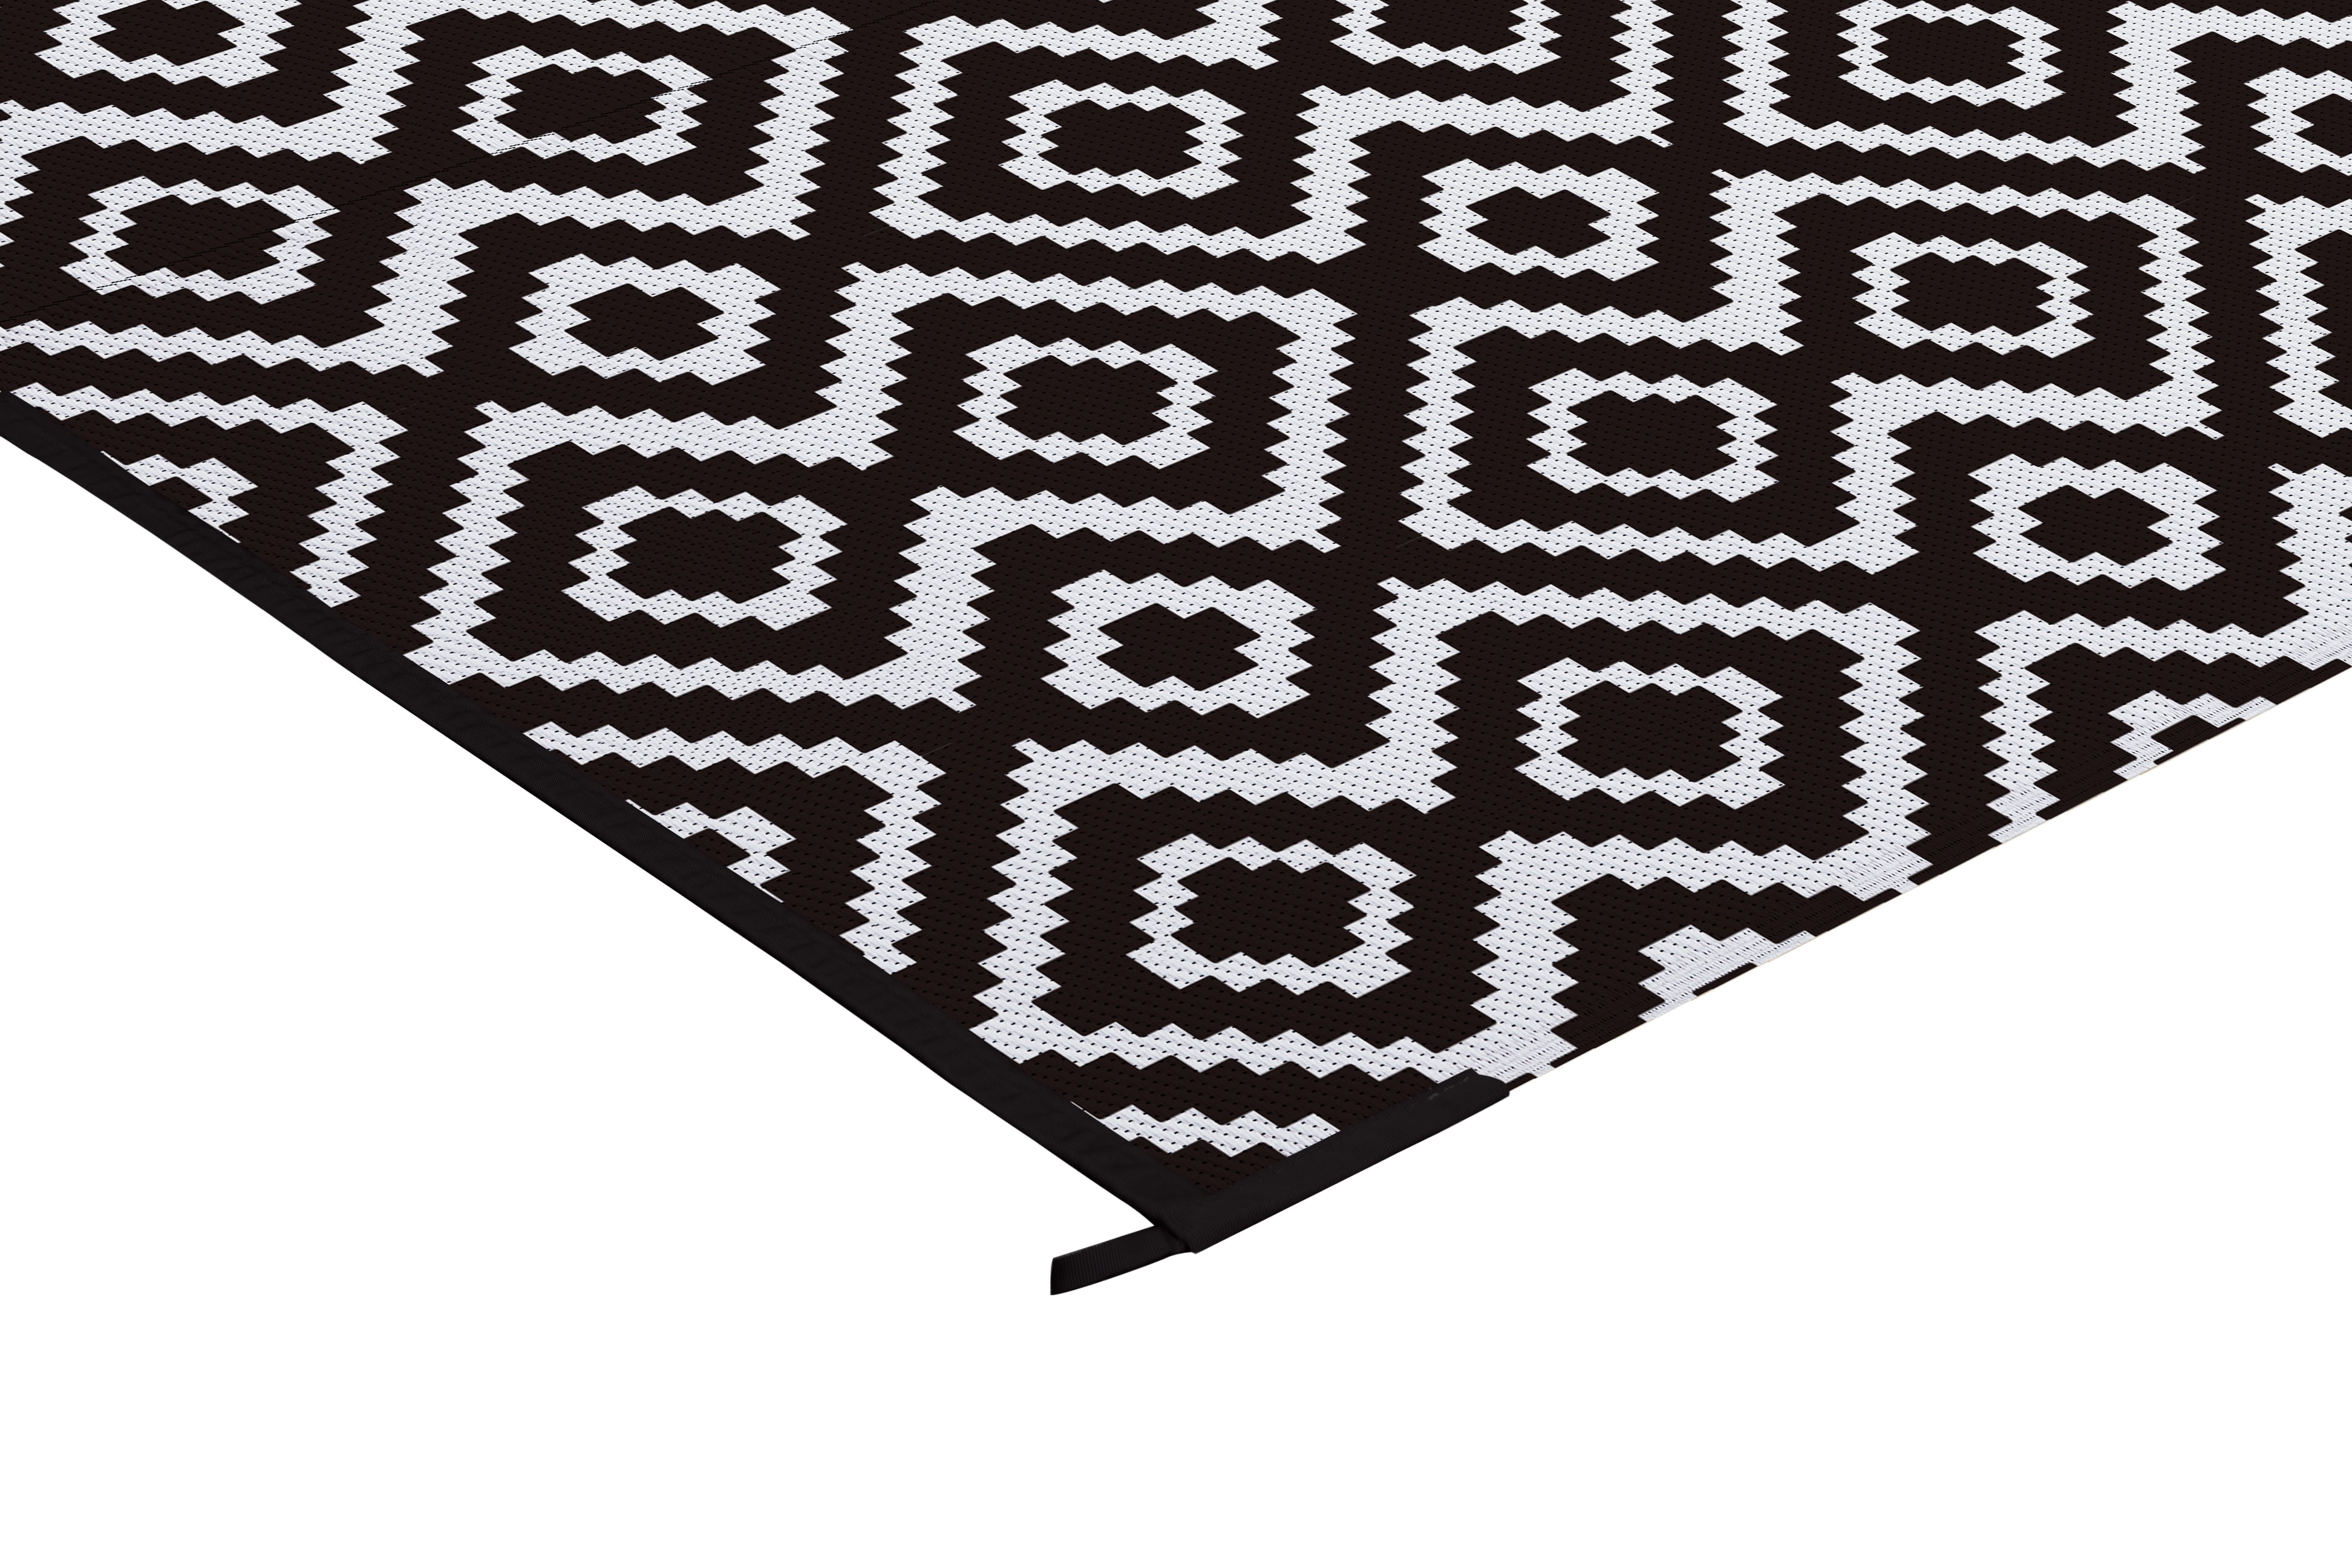 Oversized Black & Gray Geometric Reversible Outdoor Mat (3 size options) -  Mountain Mat